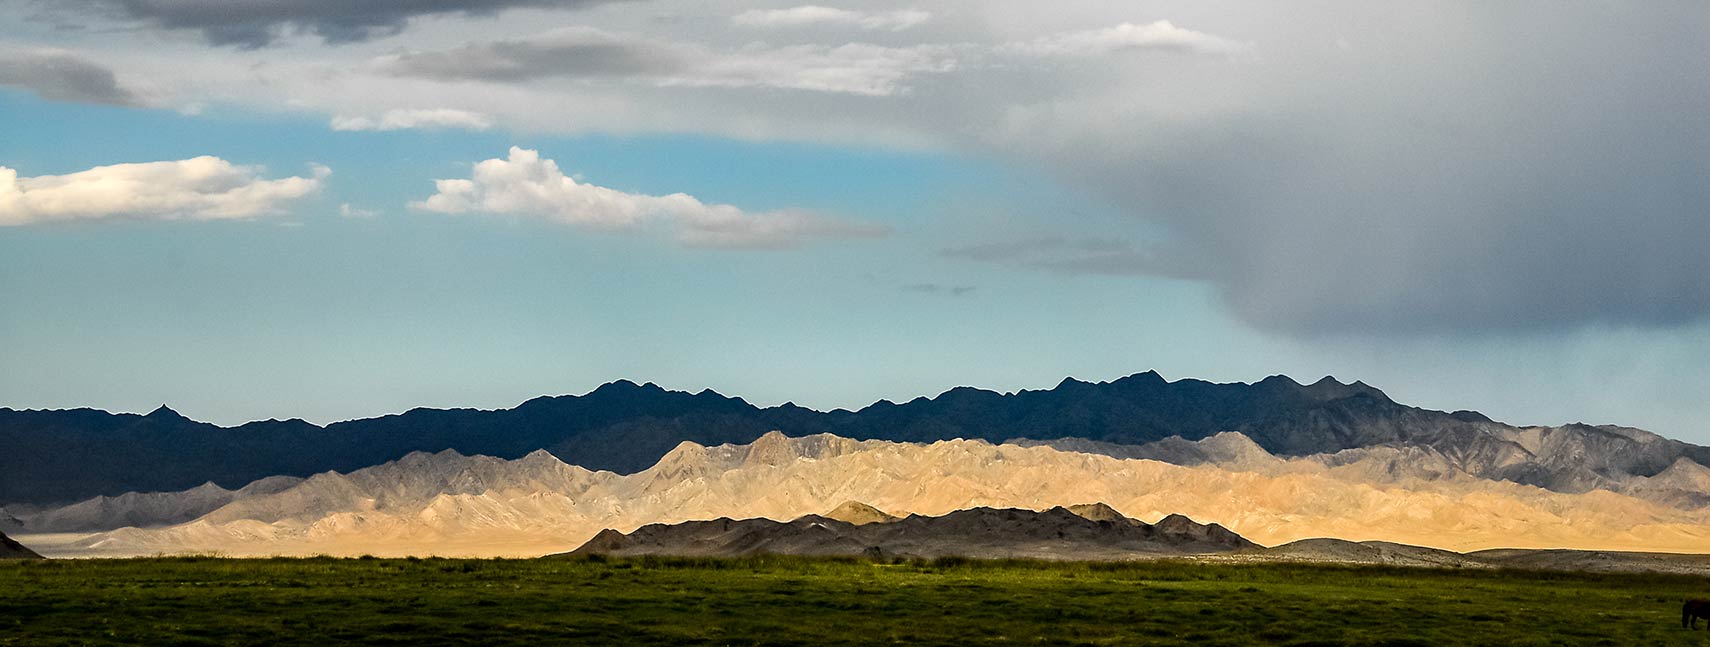 Mongolian Landscape in Khovd Province